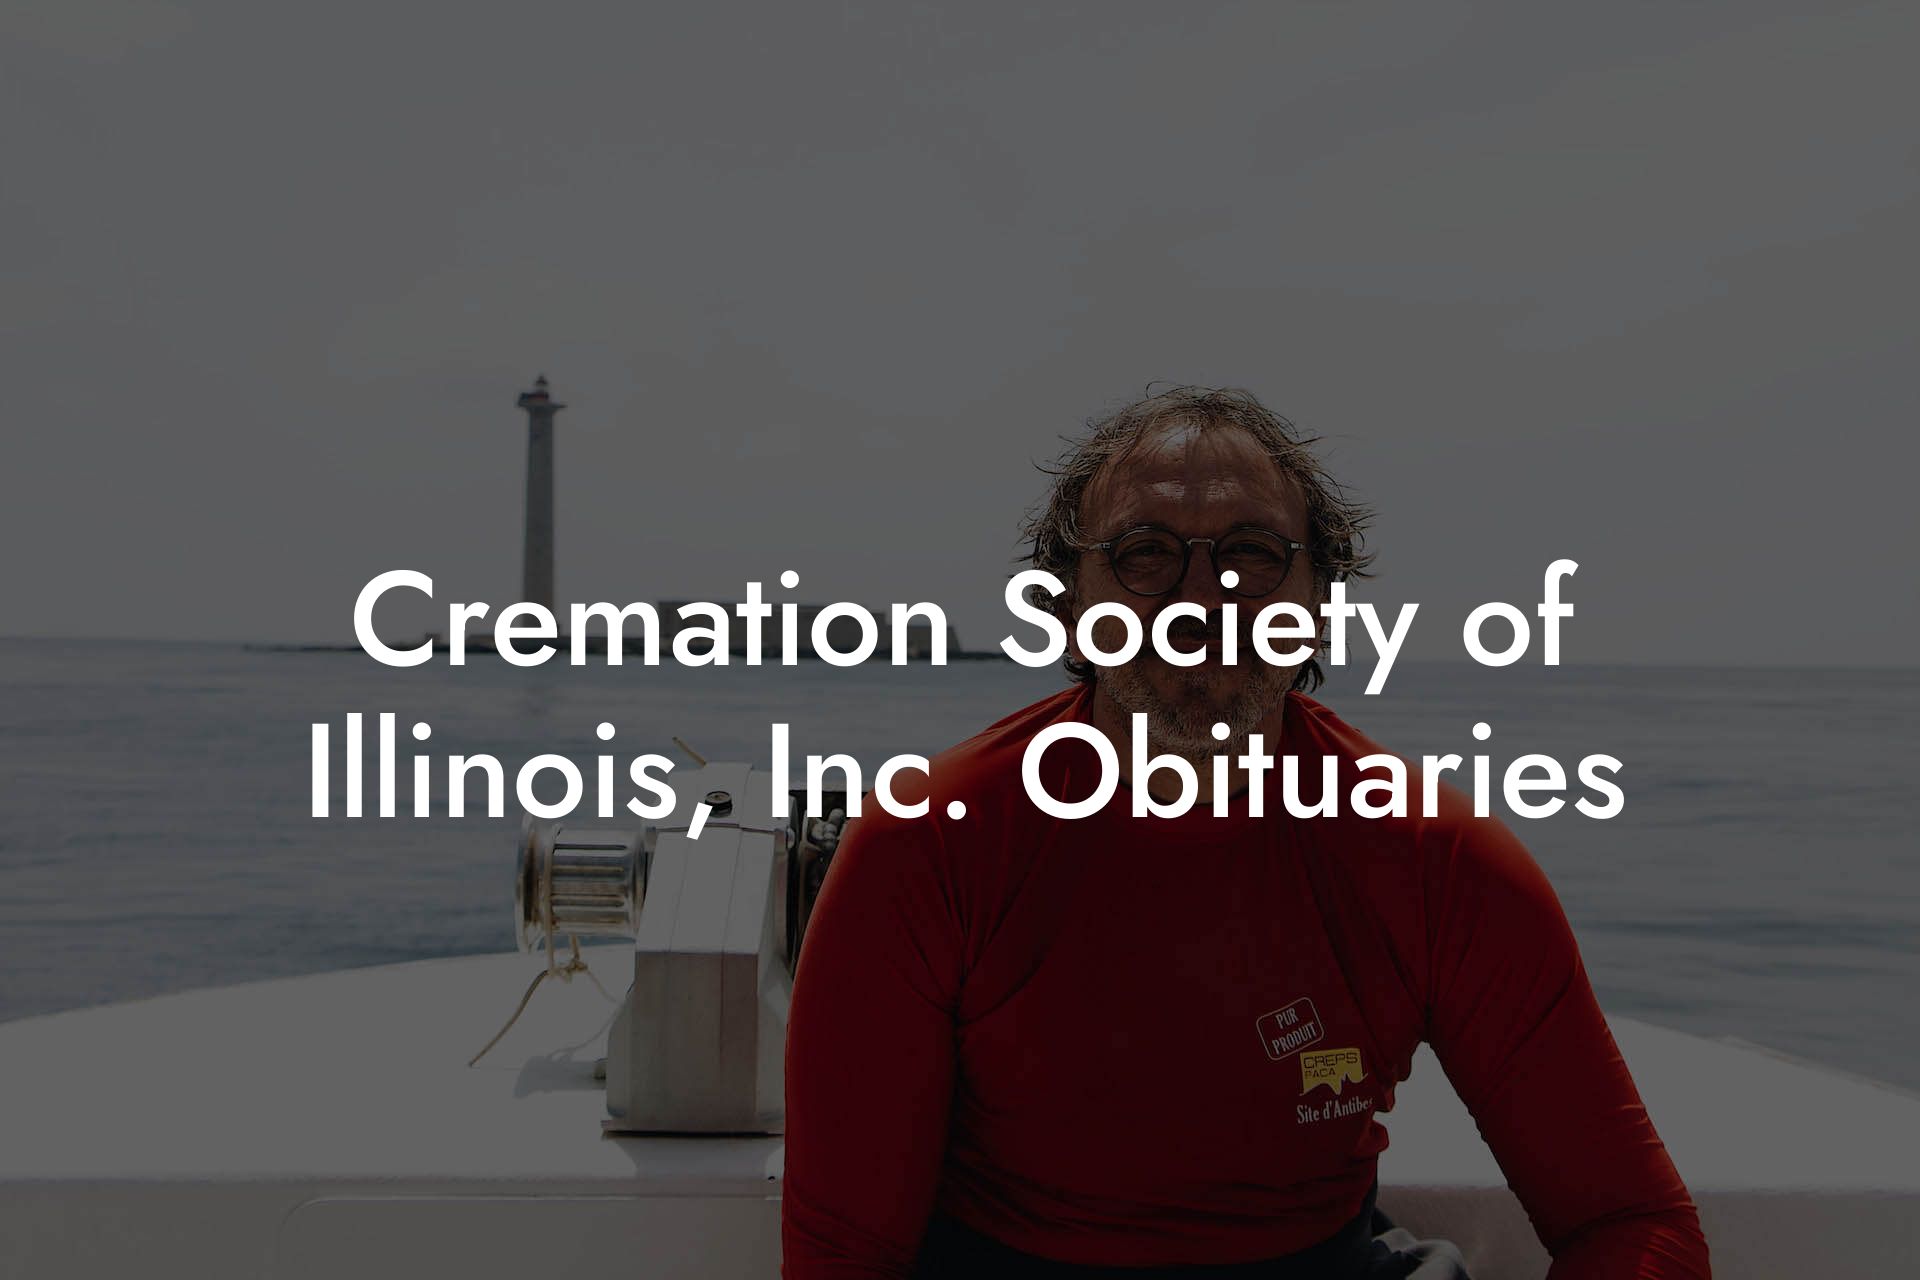 Cremation Society of Illinois, Inc. Obituaries